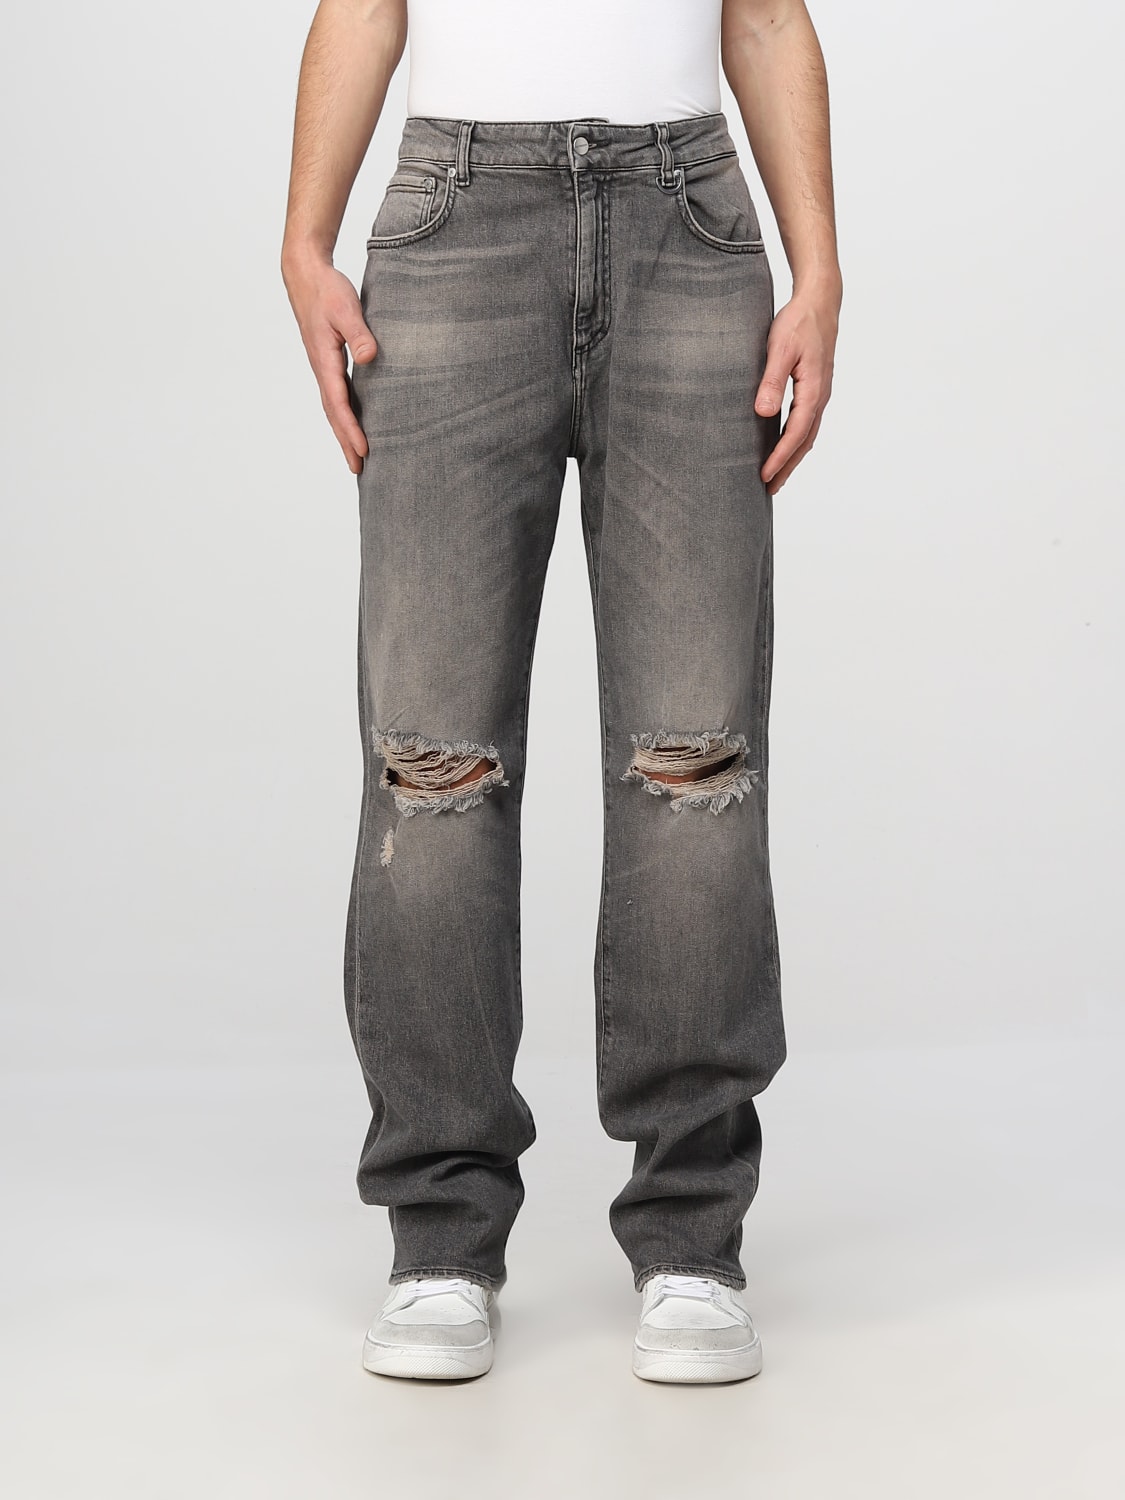 Bestaan Registratie Gorgelen Represent Outlet: jeans for man - Grey | Represent jeans M07074 online on  GIGLIO.COM